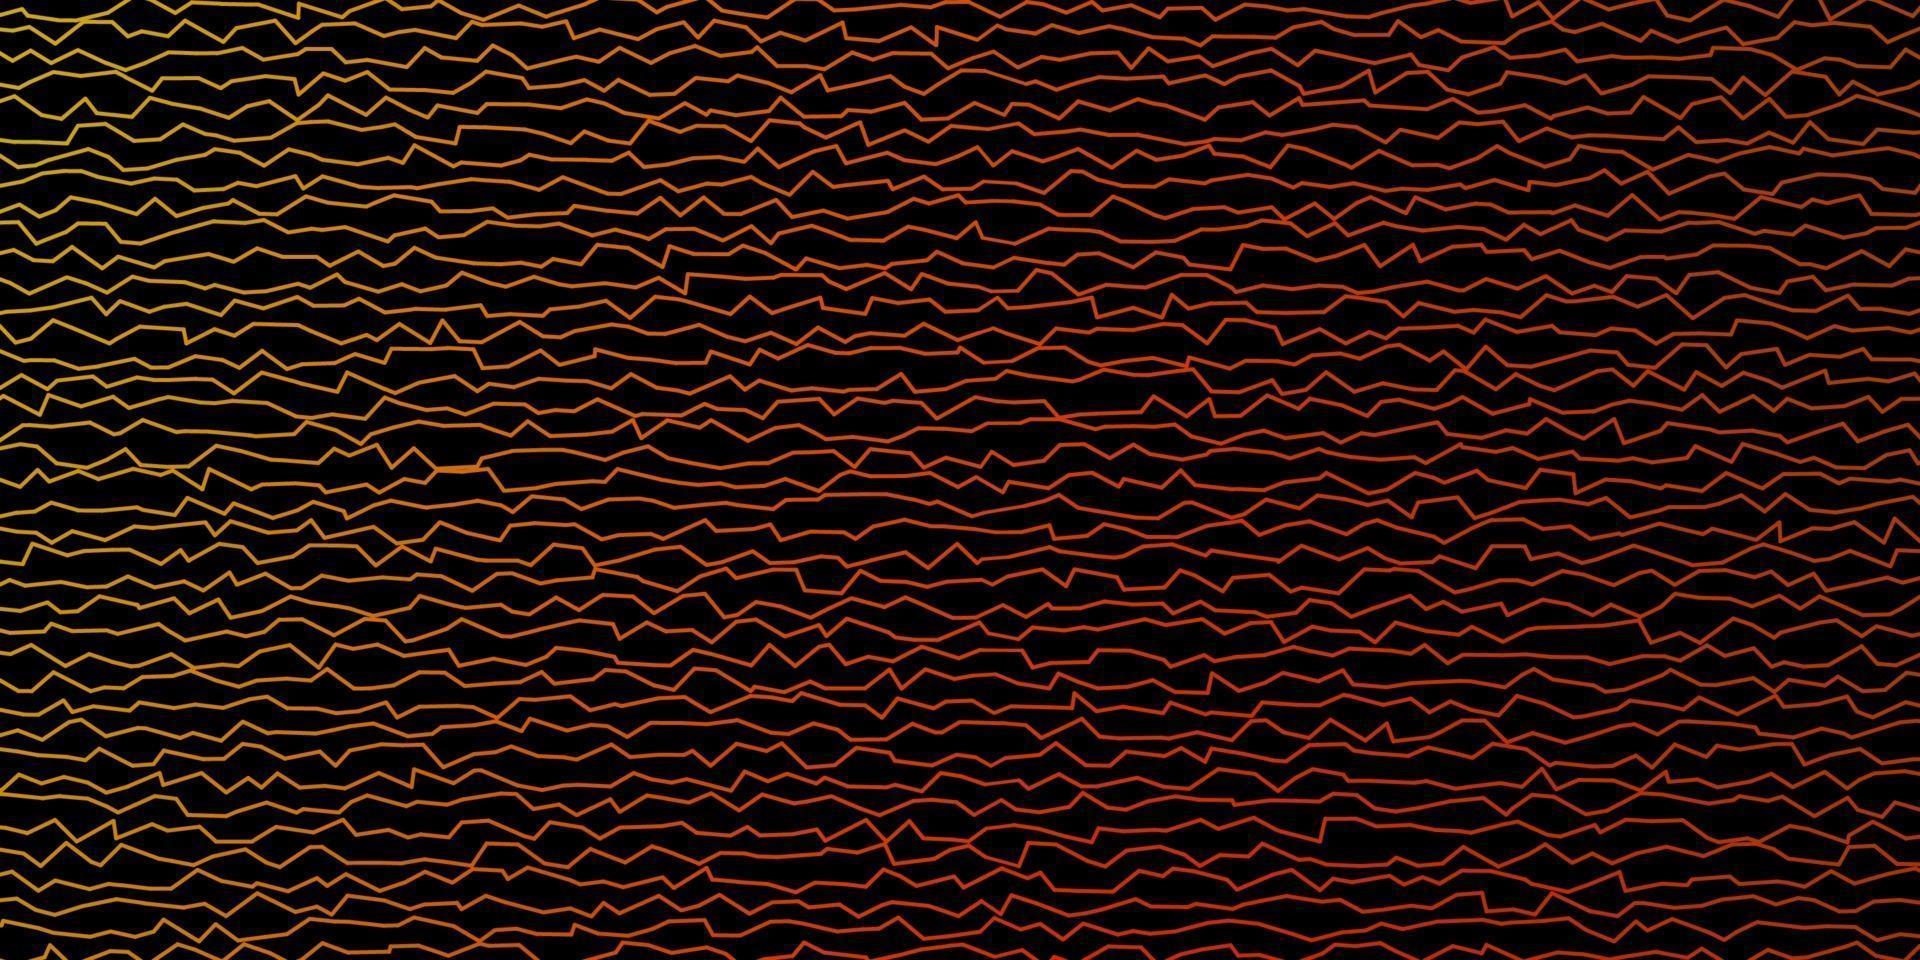 mörk orange vektor mönster med linjer.